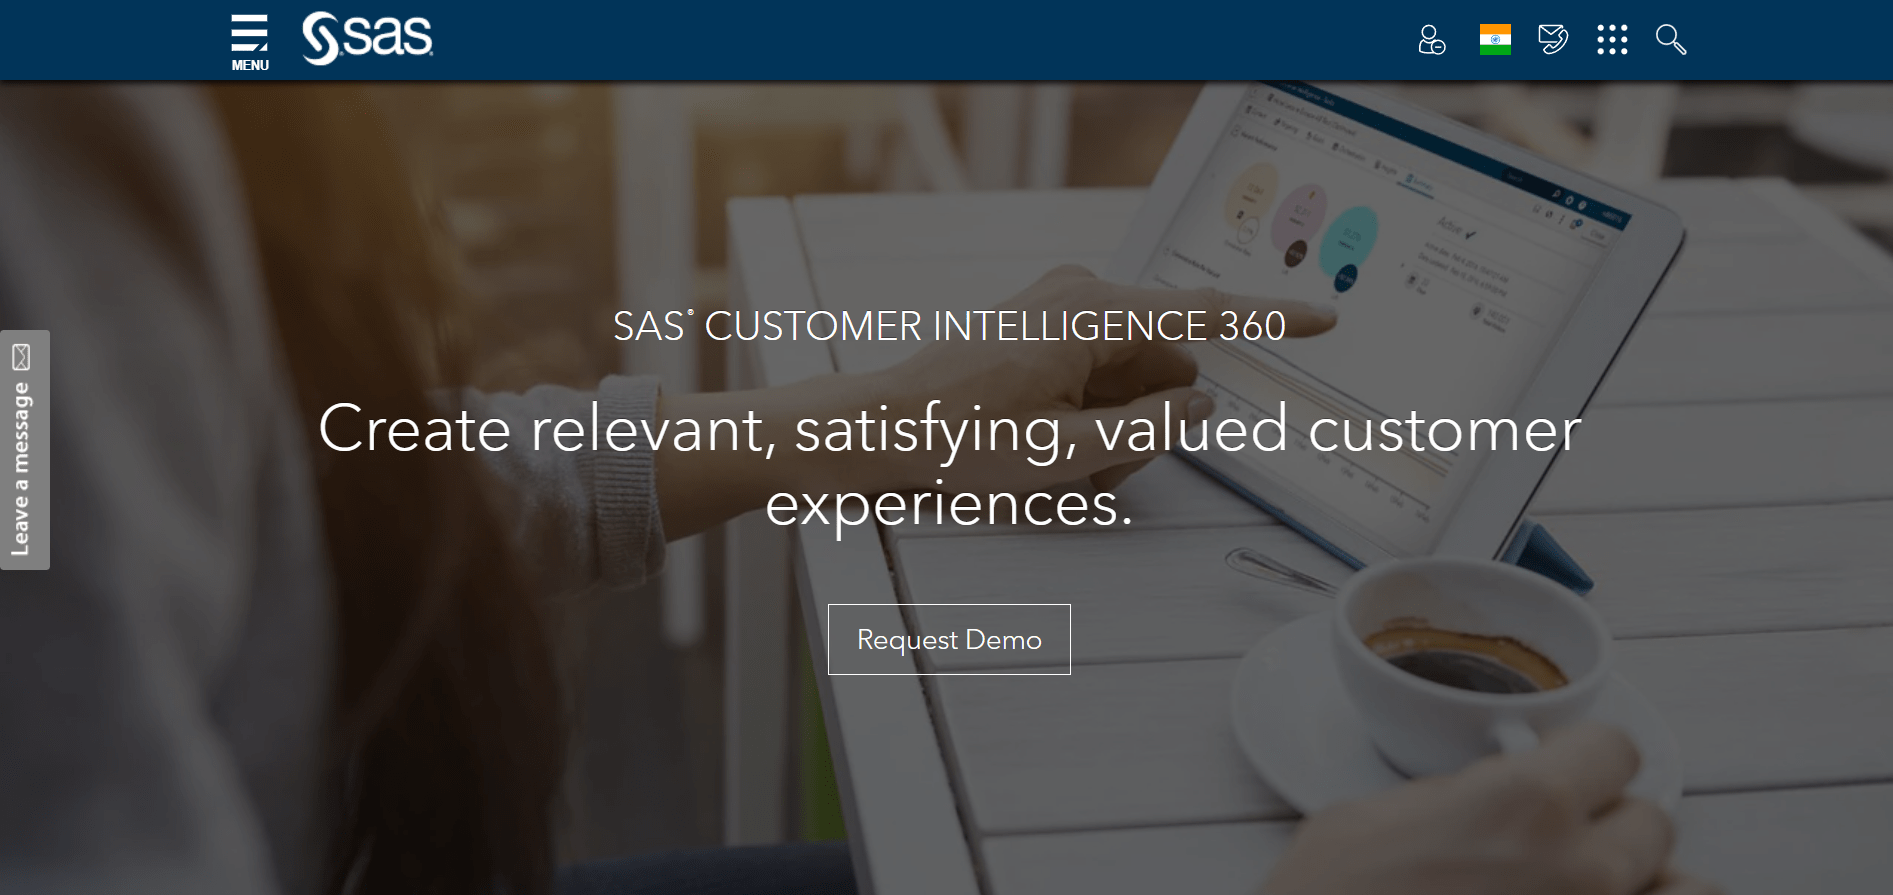 SAS Customer Intelligence 360 for customer experience